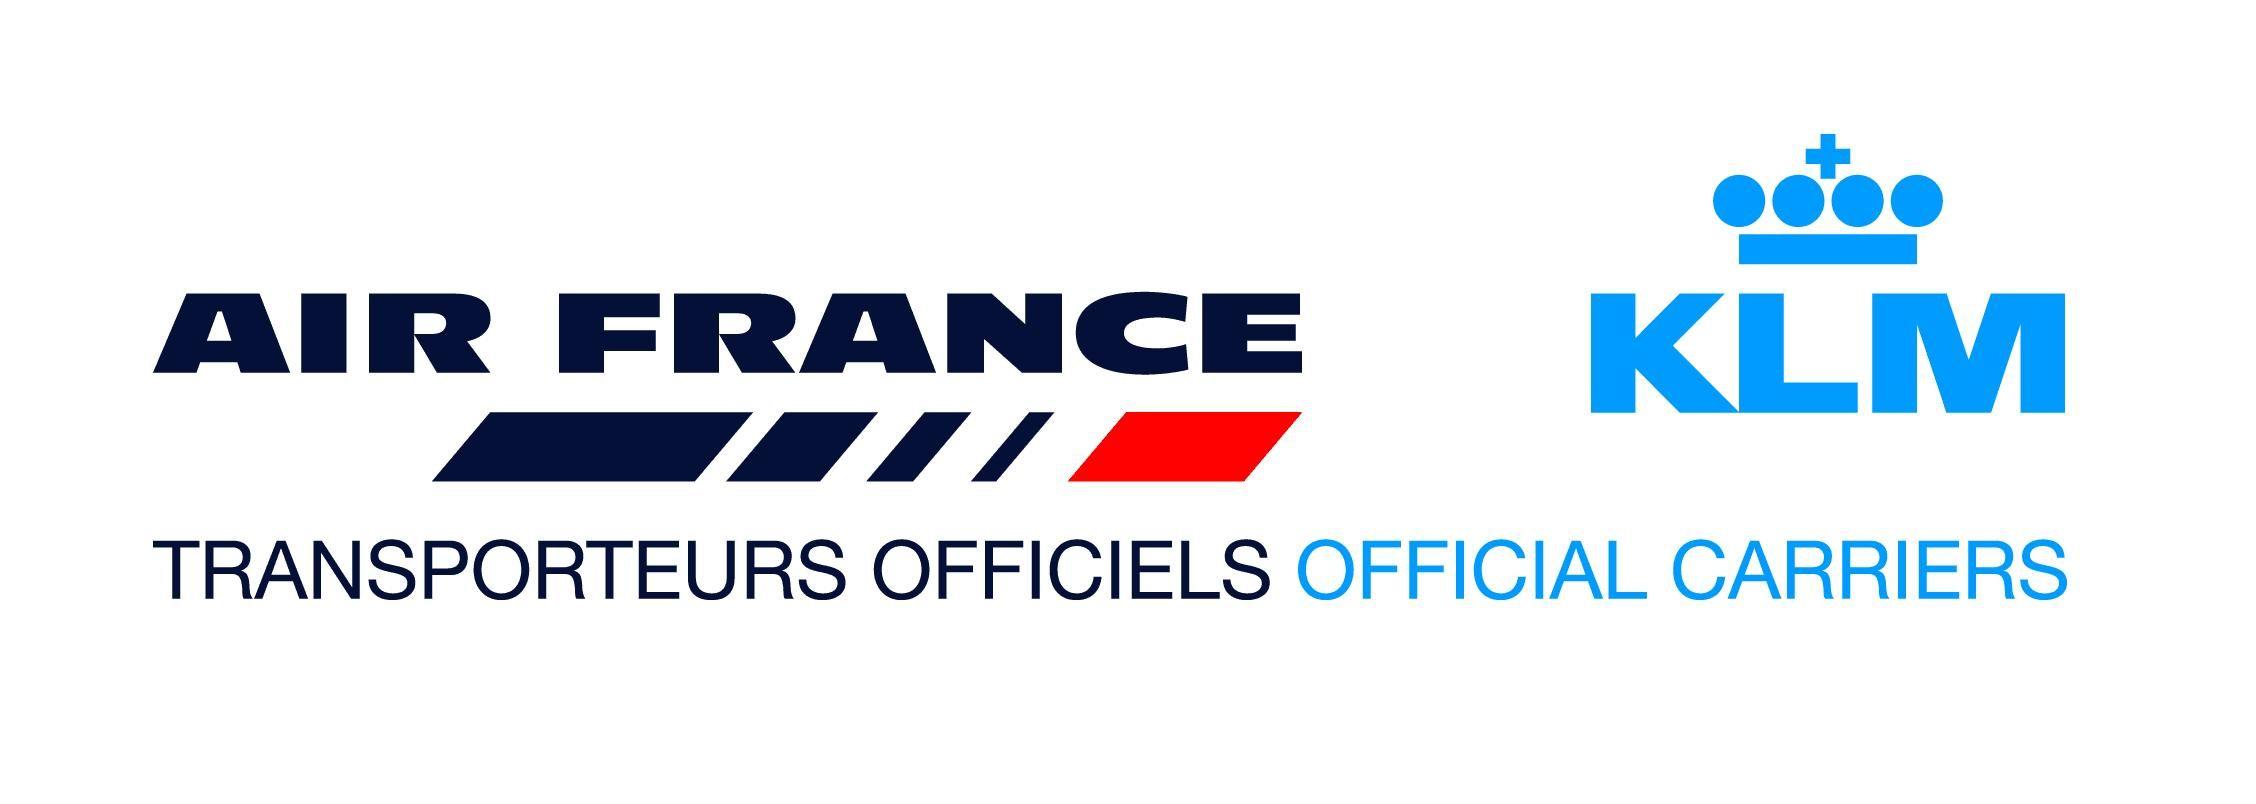 Air France Logo - Air France KLM « Logos & Brands Directory